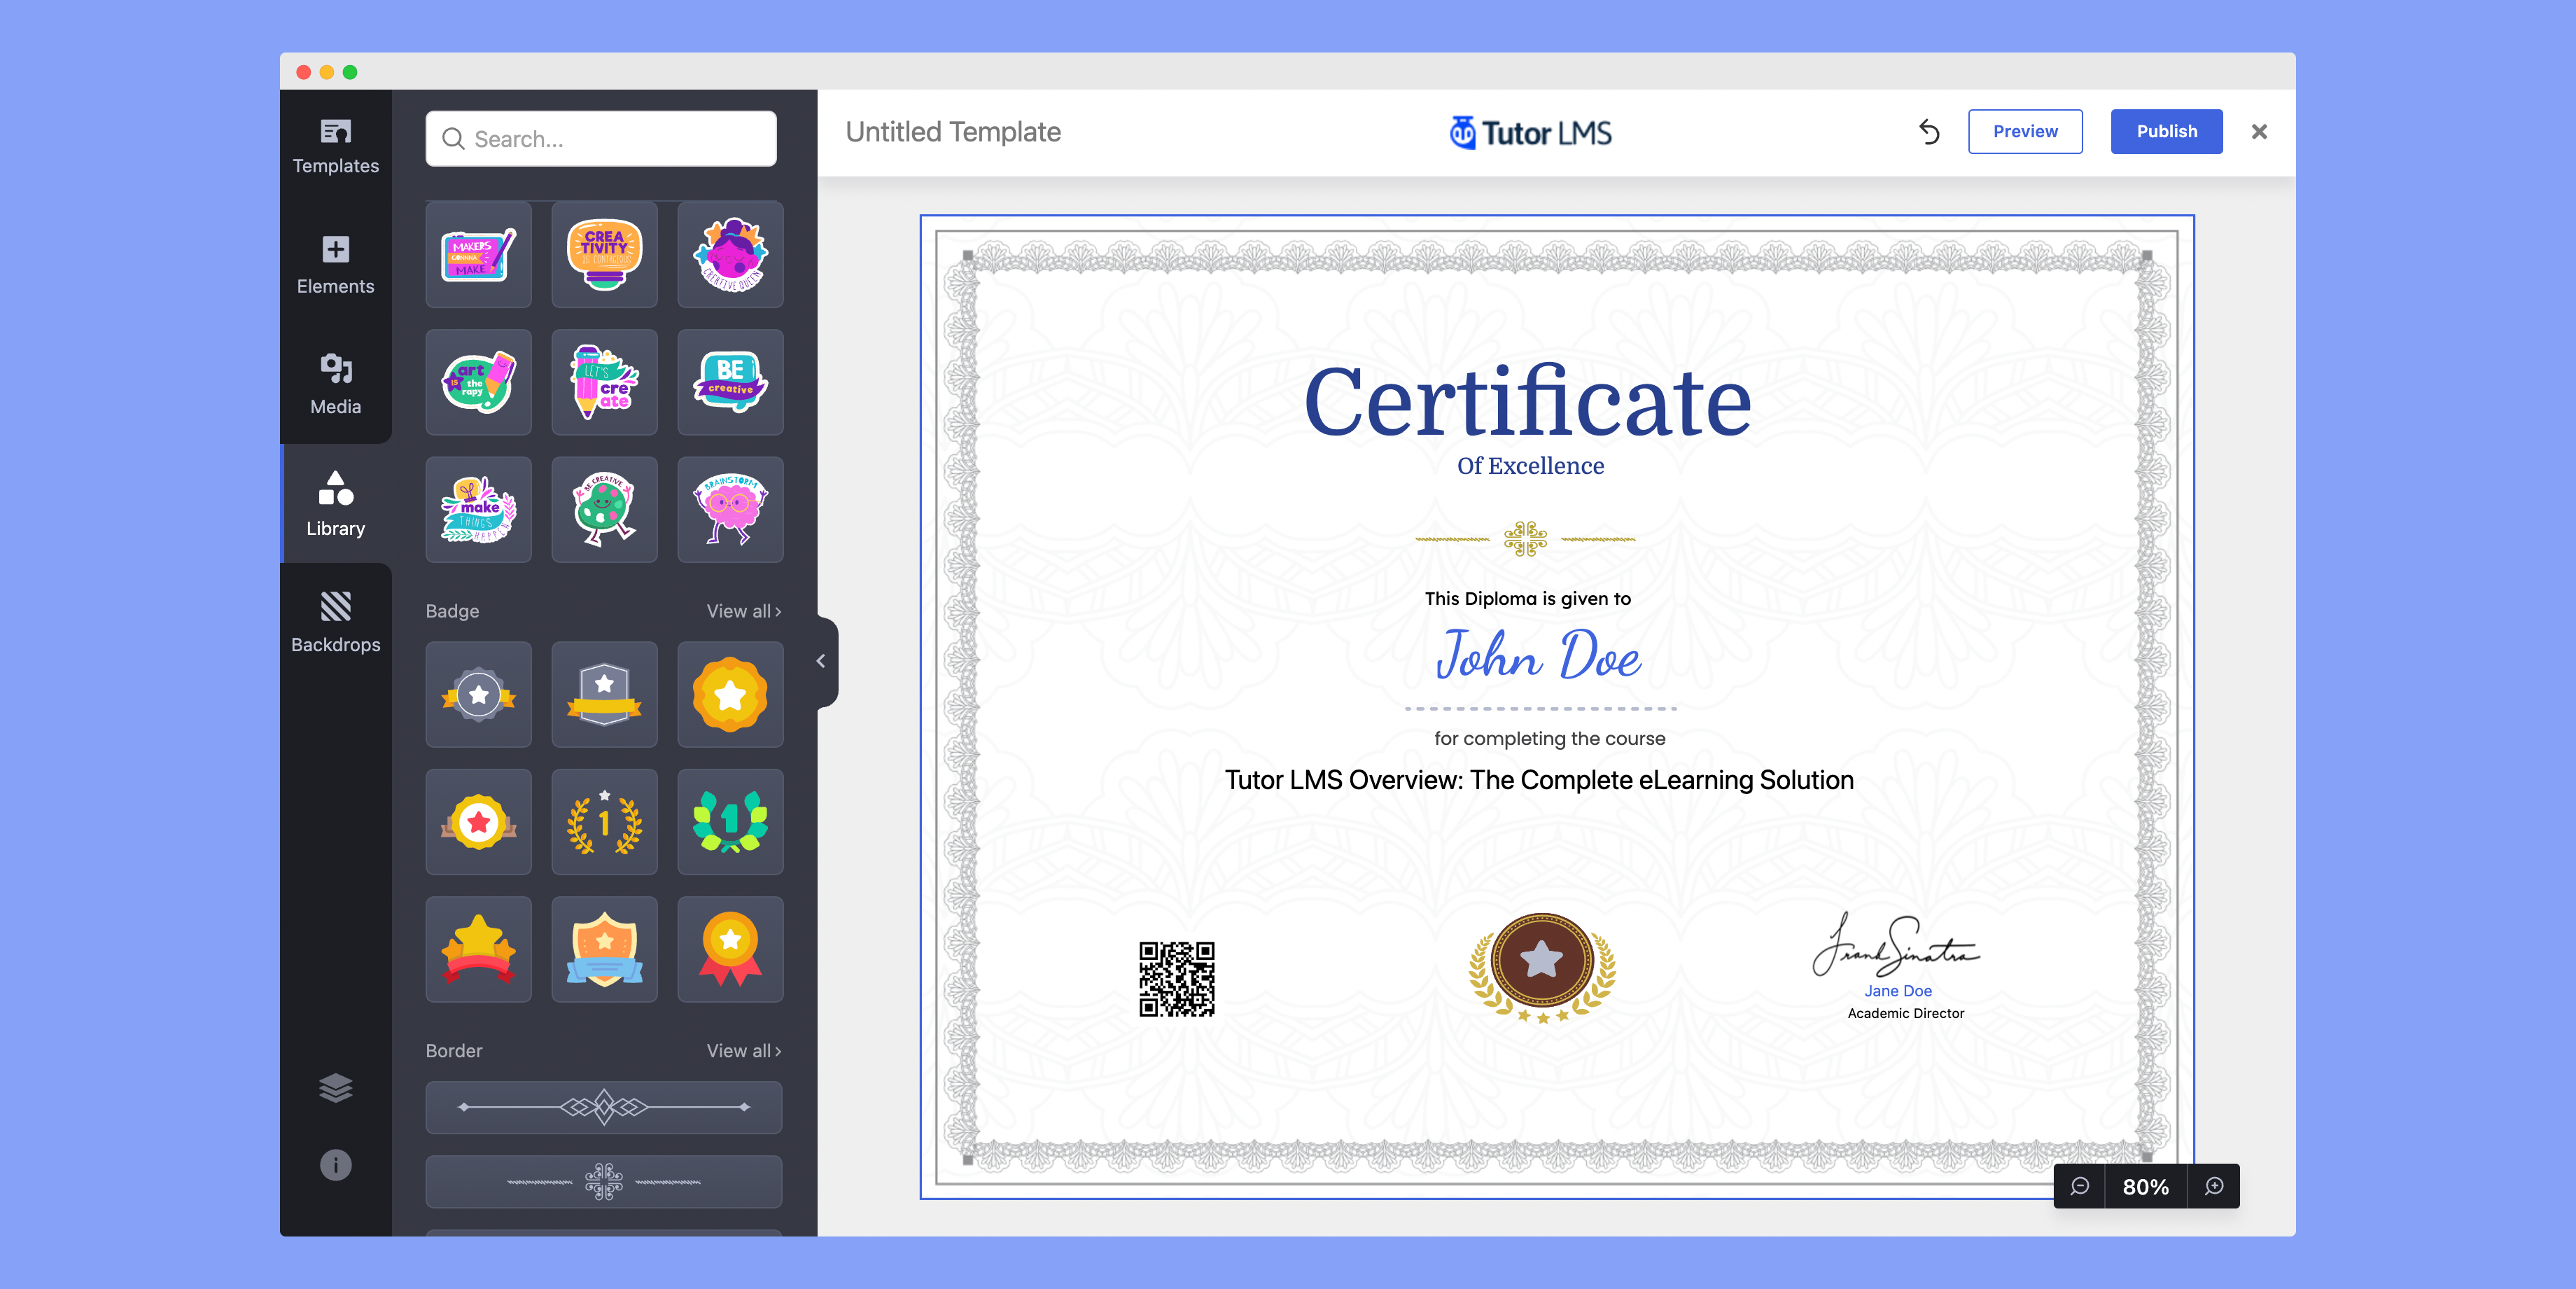 Designing Certificate from Scratch